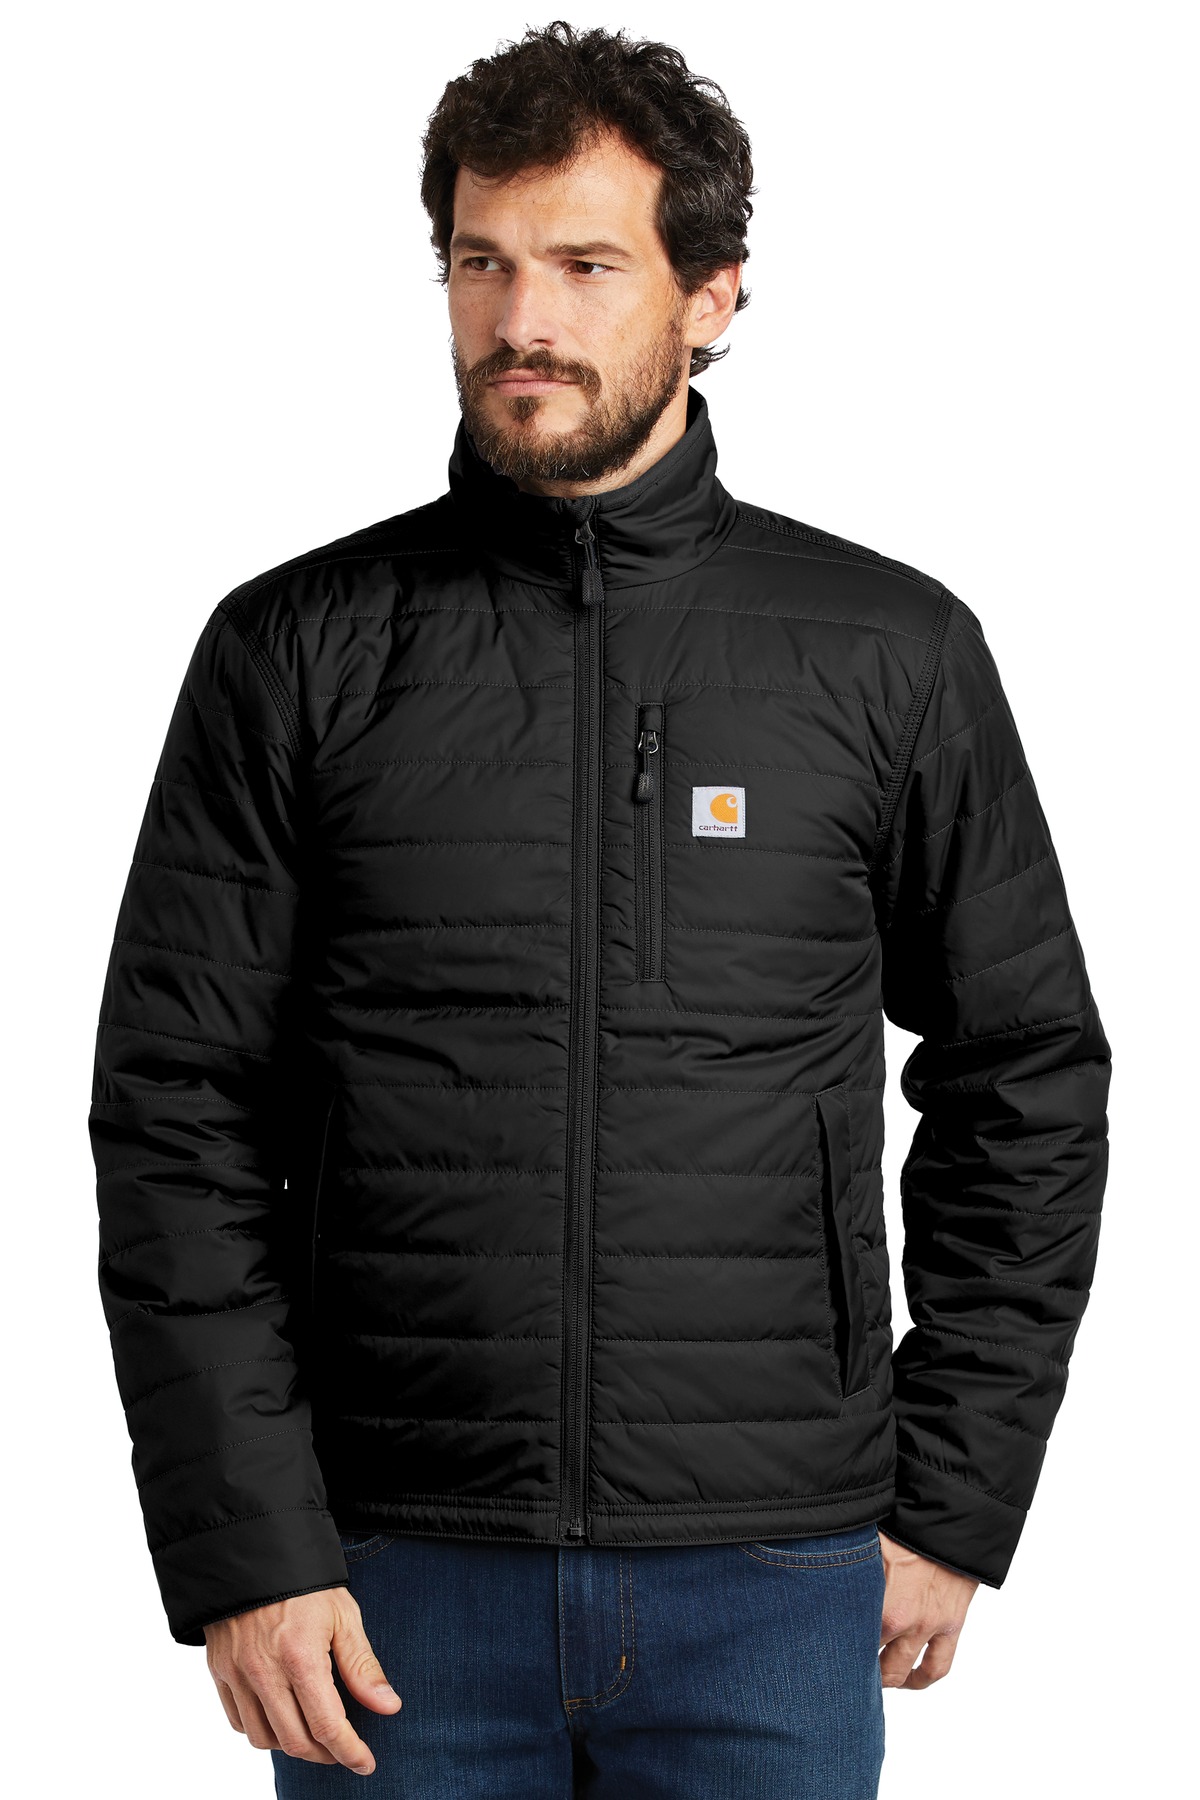 Men's Carhartt black winter puffer jacket